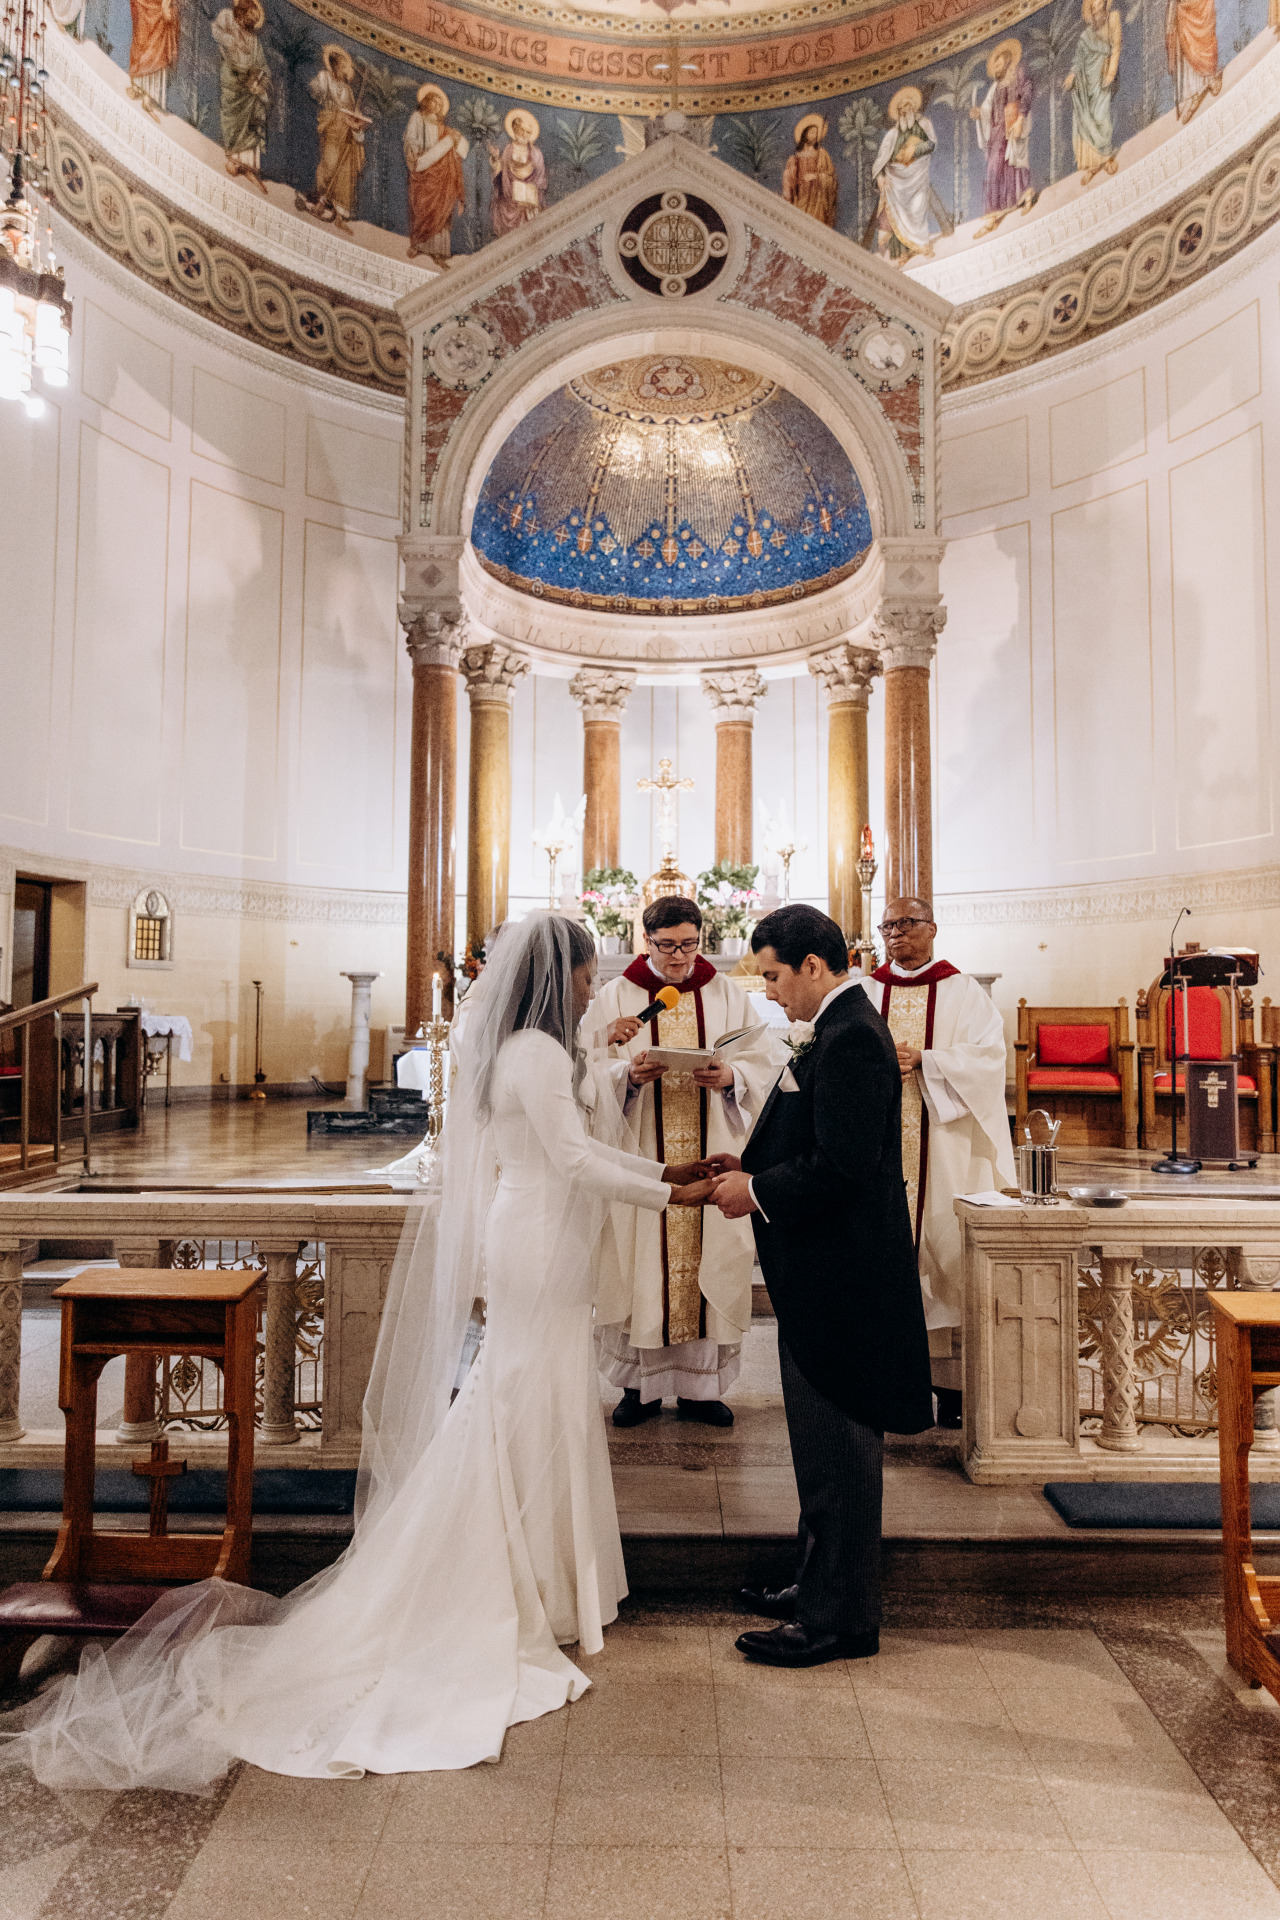 Catholic ceremony wedding in Jersey City New Jersey 16